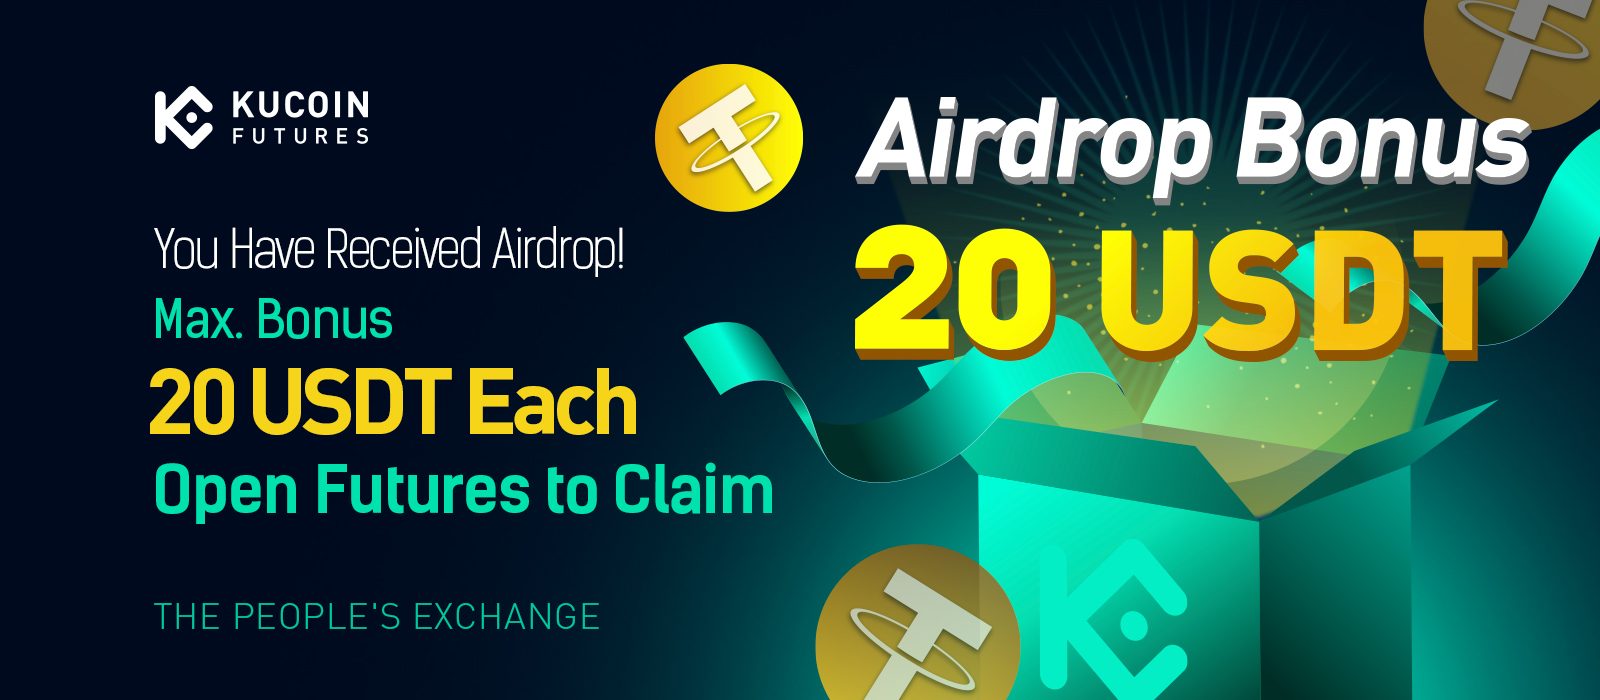 KuCoin Airdrop " Reivindique tokens USDT gratuitos